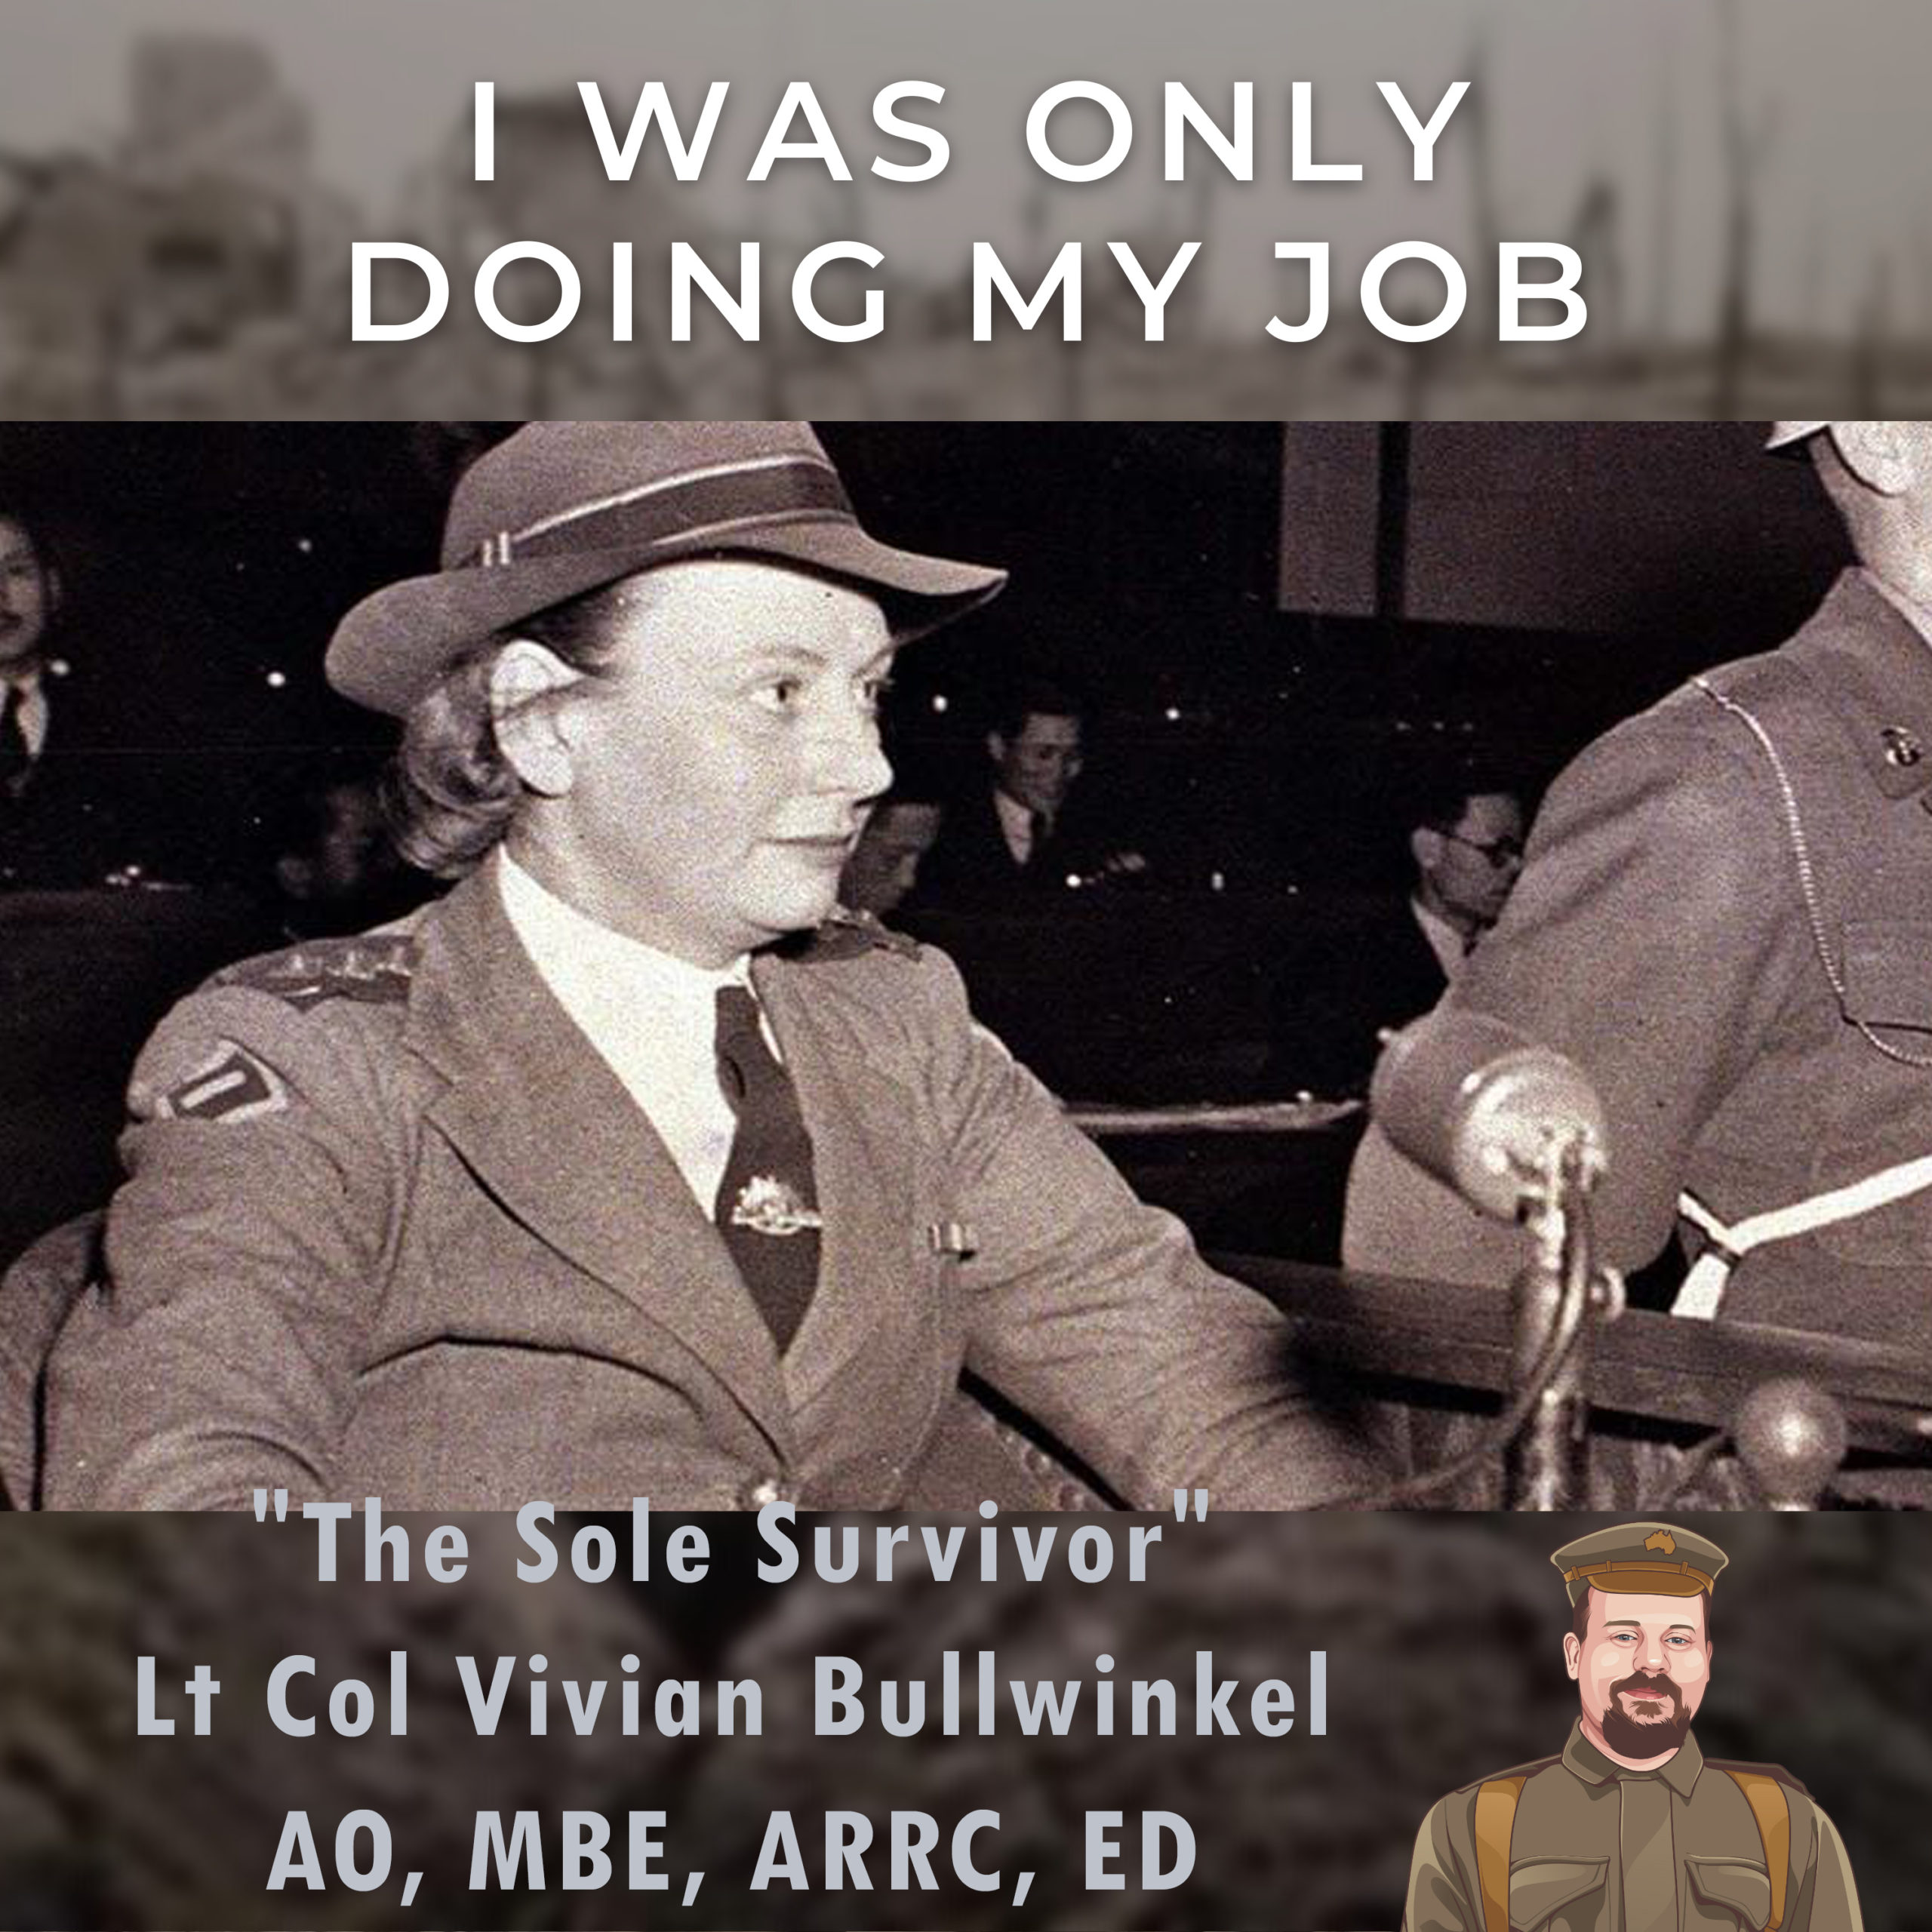 The Sole Survivor: Lt Col Vivian Bullwinkel AO, MBE, ARRC, ED